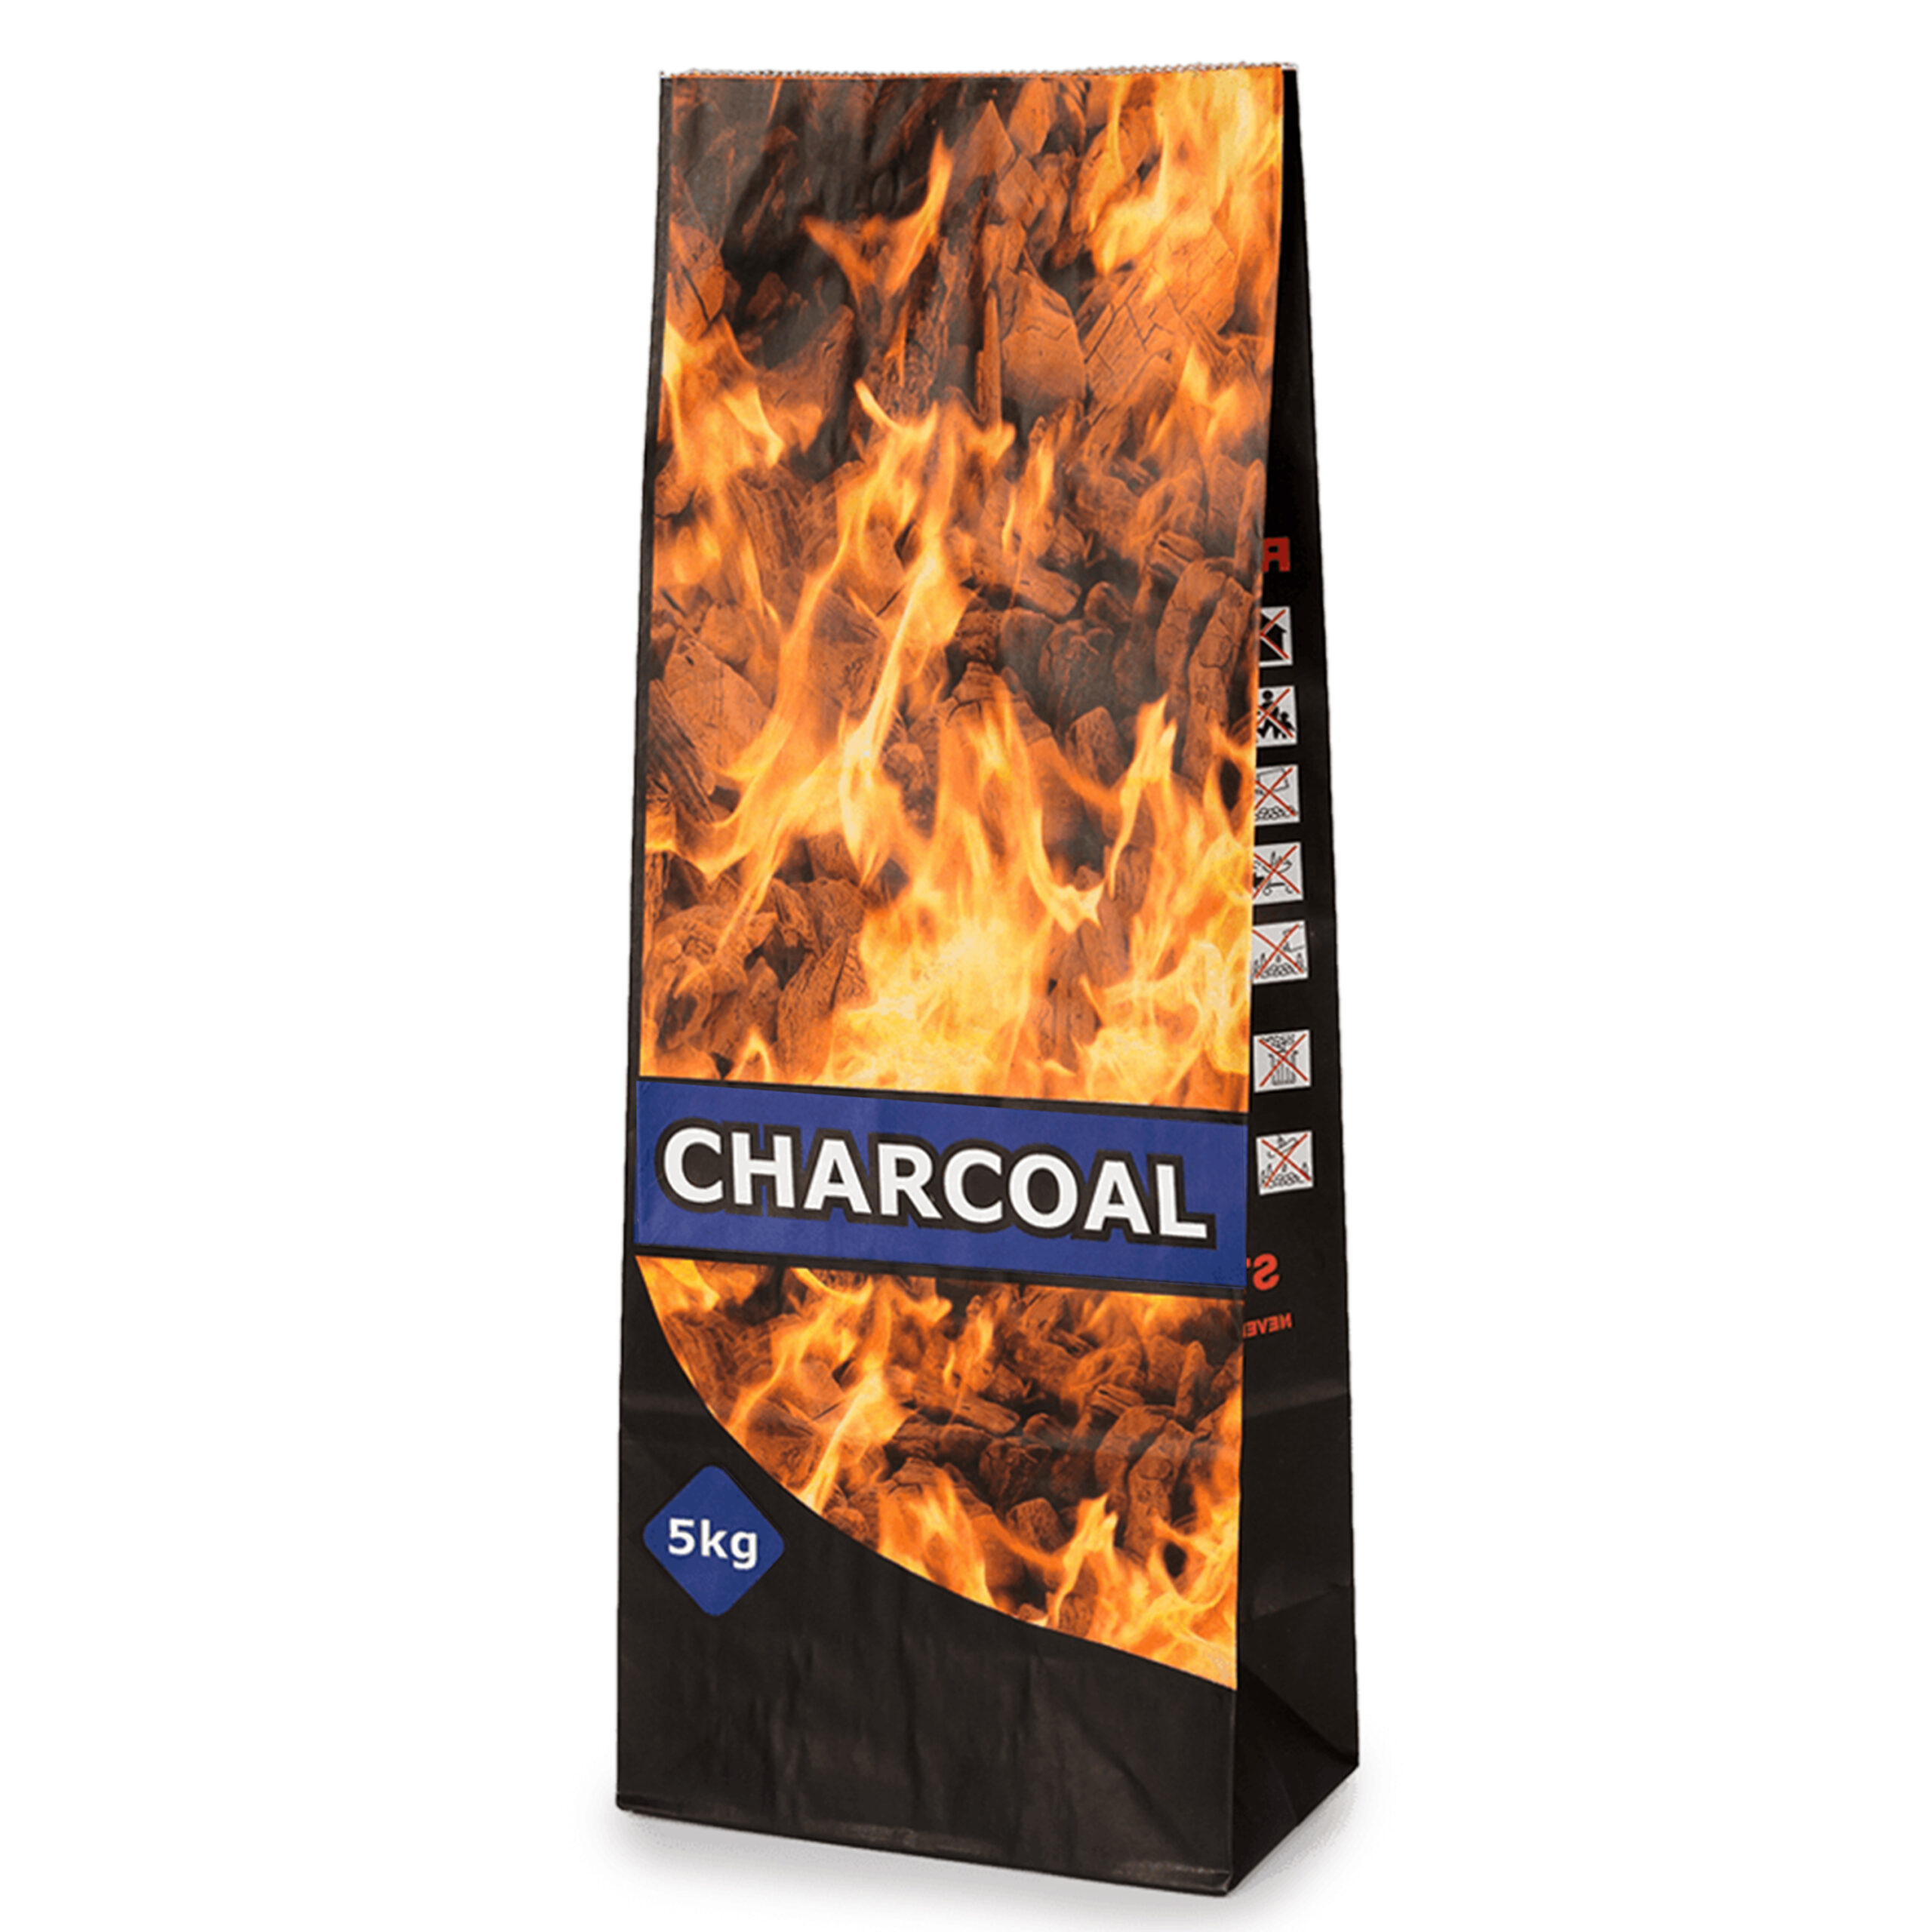 CHARCOAL
PRINTED BAGS
4KG
560x240x150mm
(1x50)